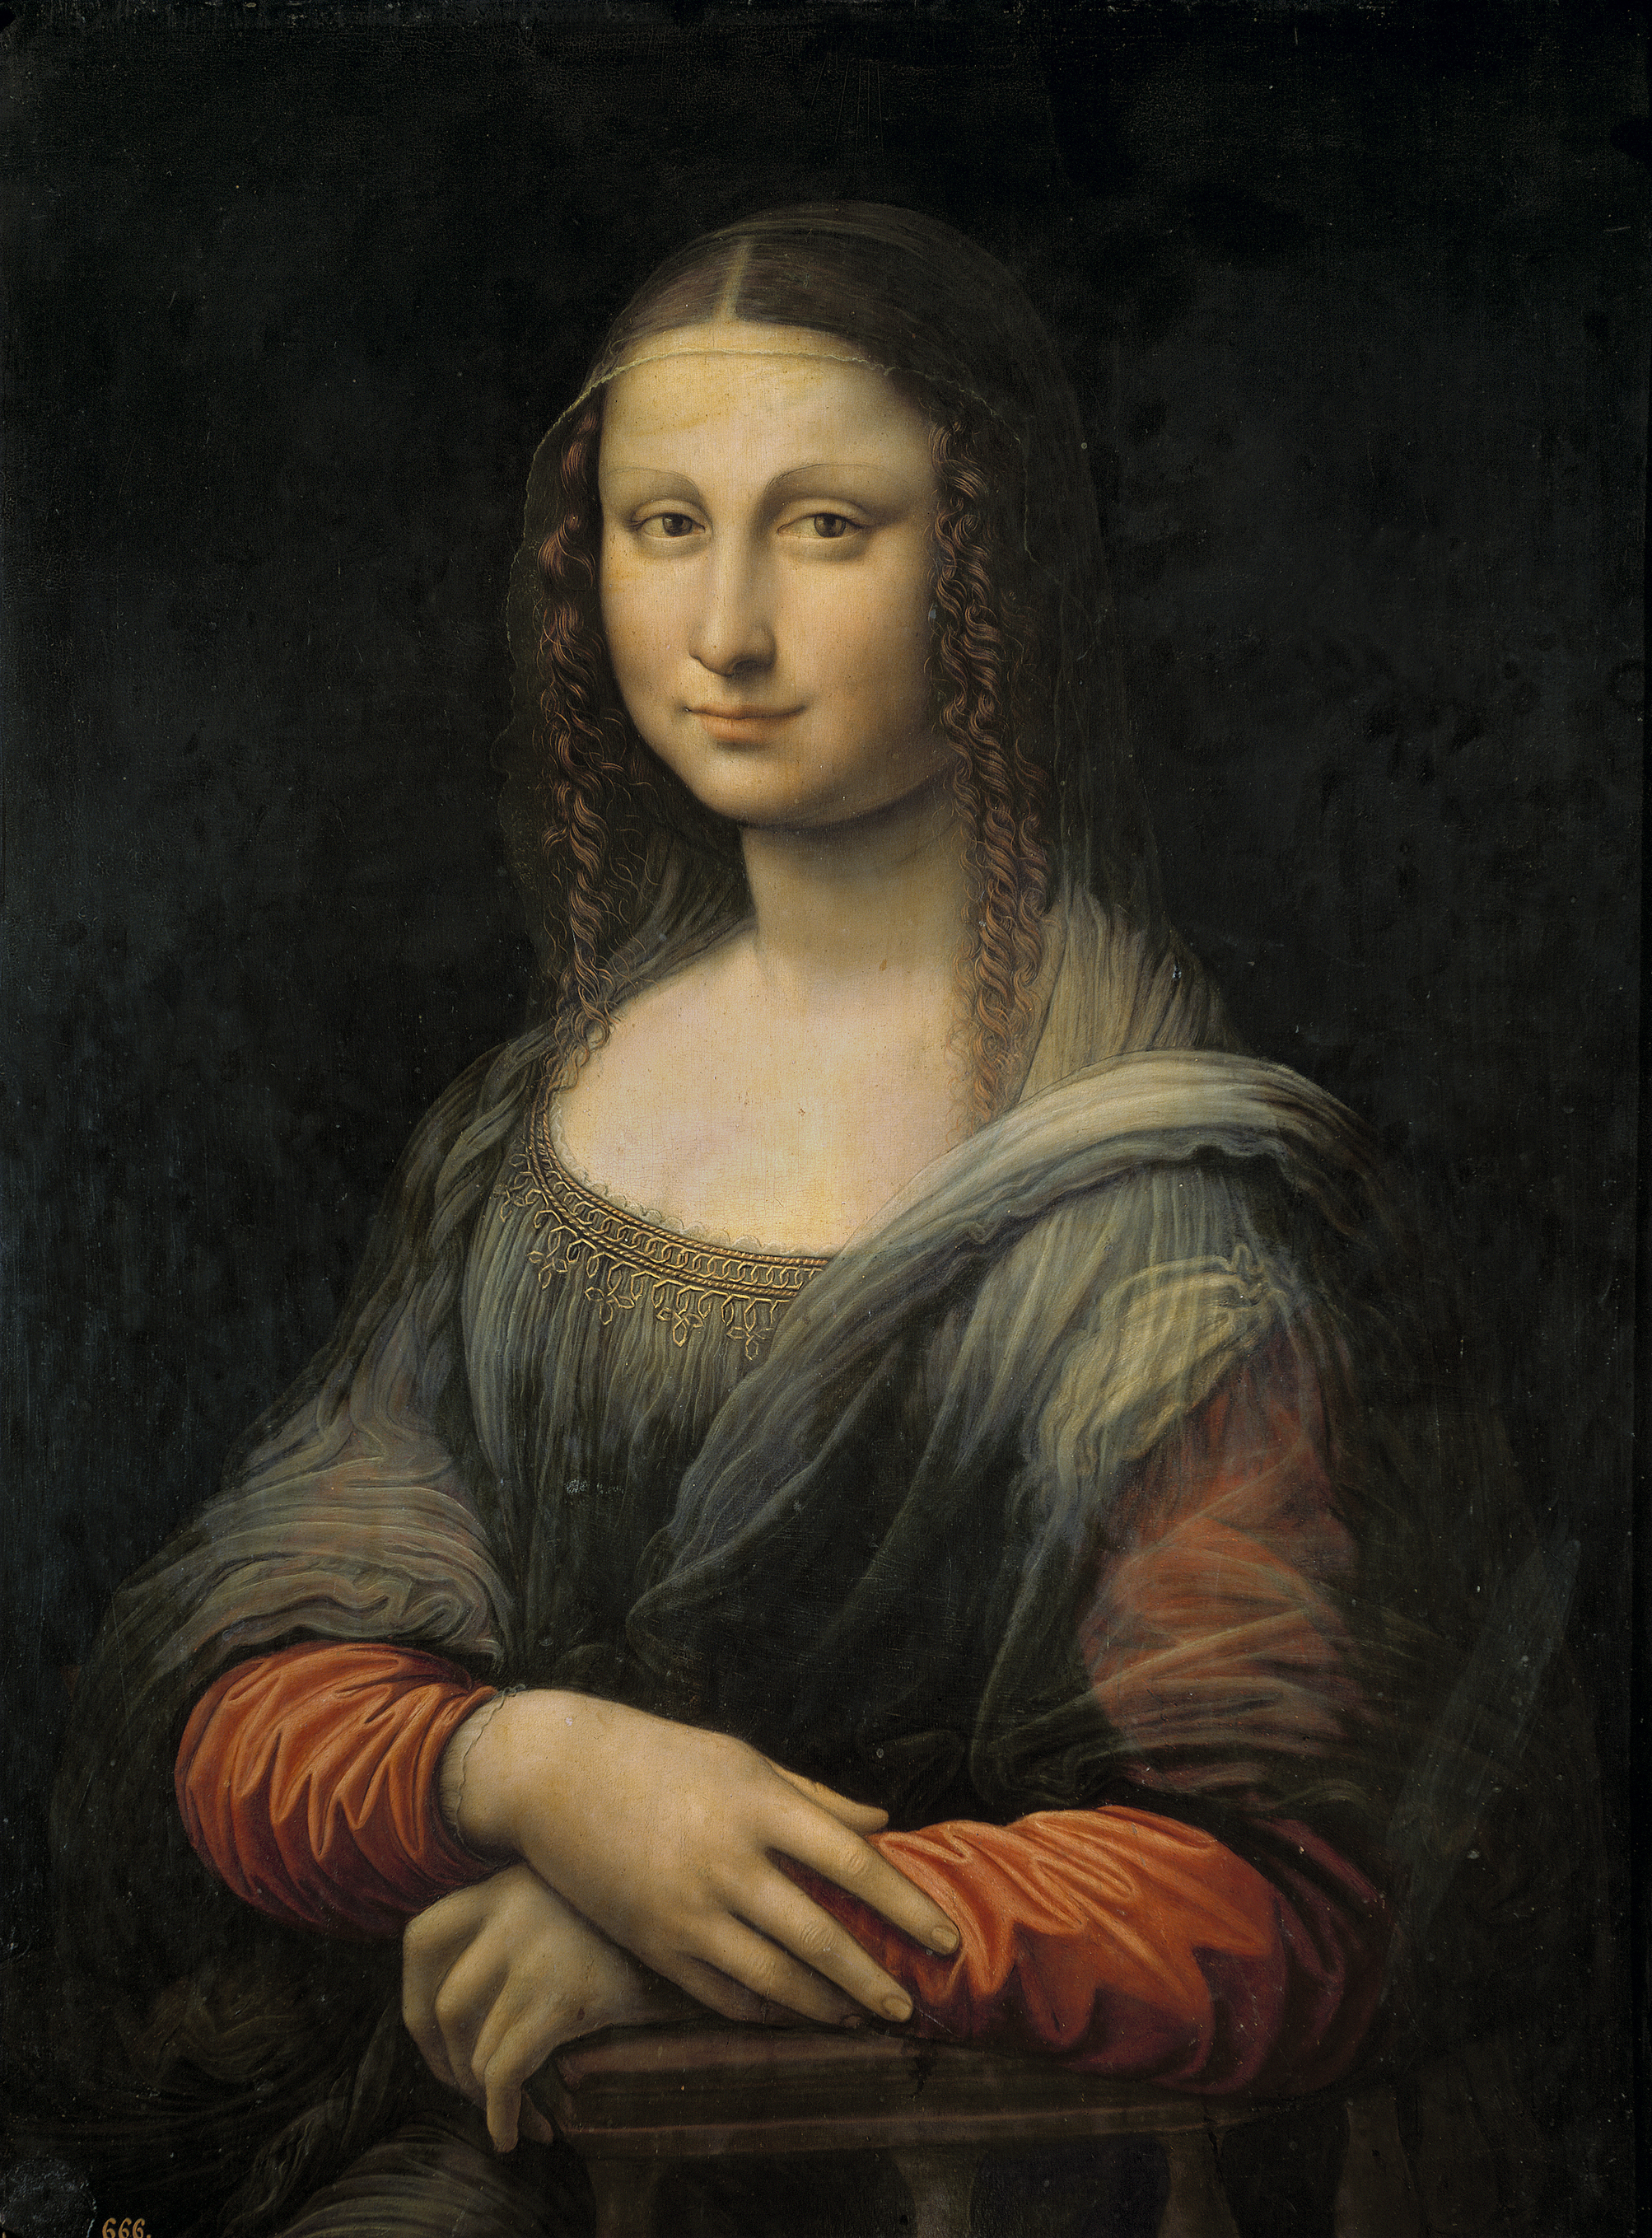 Earliest copy of Mona Lisa found in the Prado – The History Blog